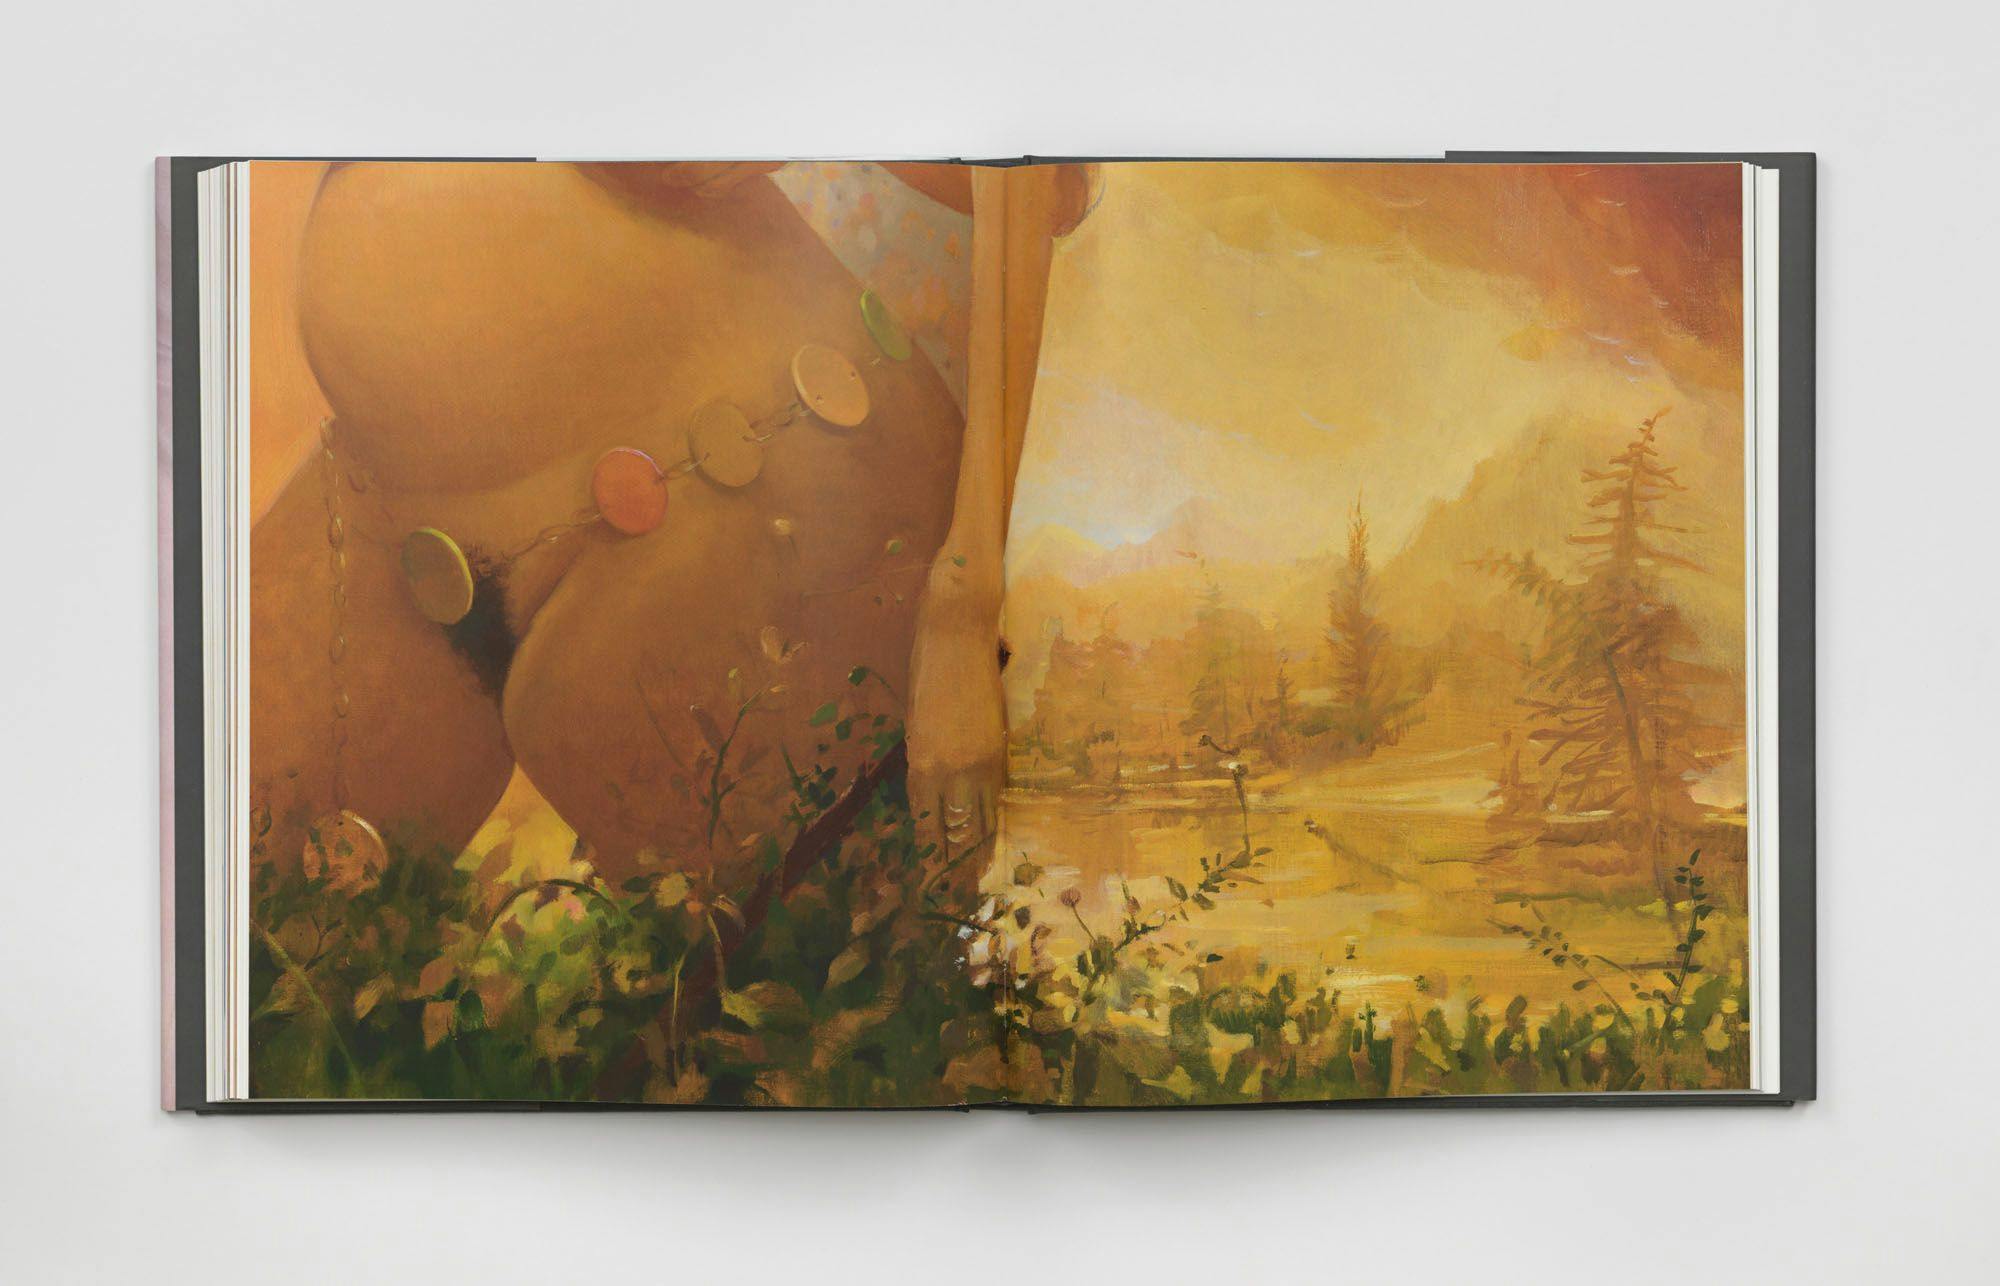 Interior spread of Lisa Yuskavage's book titled The Brood.